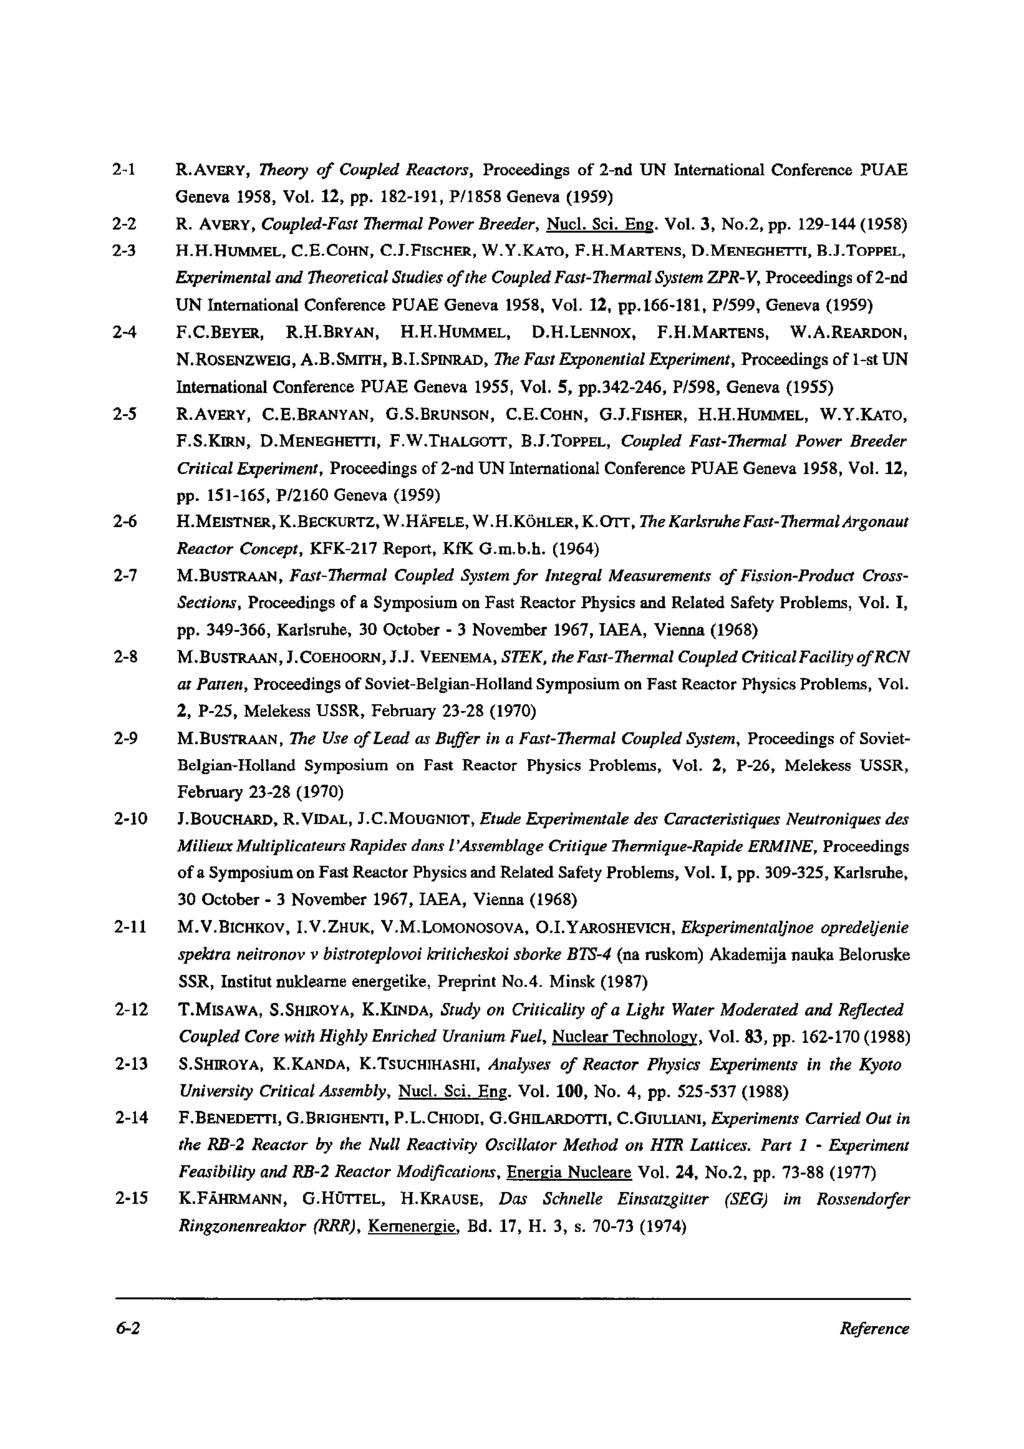 2-1 R.AVERY, Theory of Coupled Reactors, Proceedings of 2-nd UN International Conference PUAE Geneva 1958, Vol. 12, pp. 182-191, P/1858 Geneva (1959) 2-2 R.